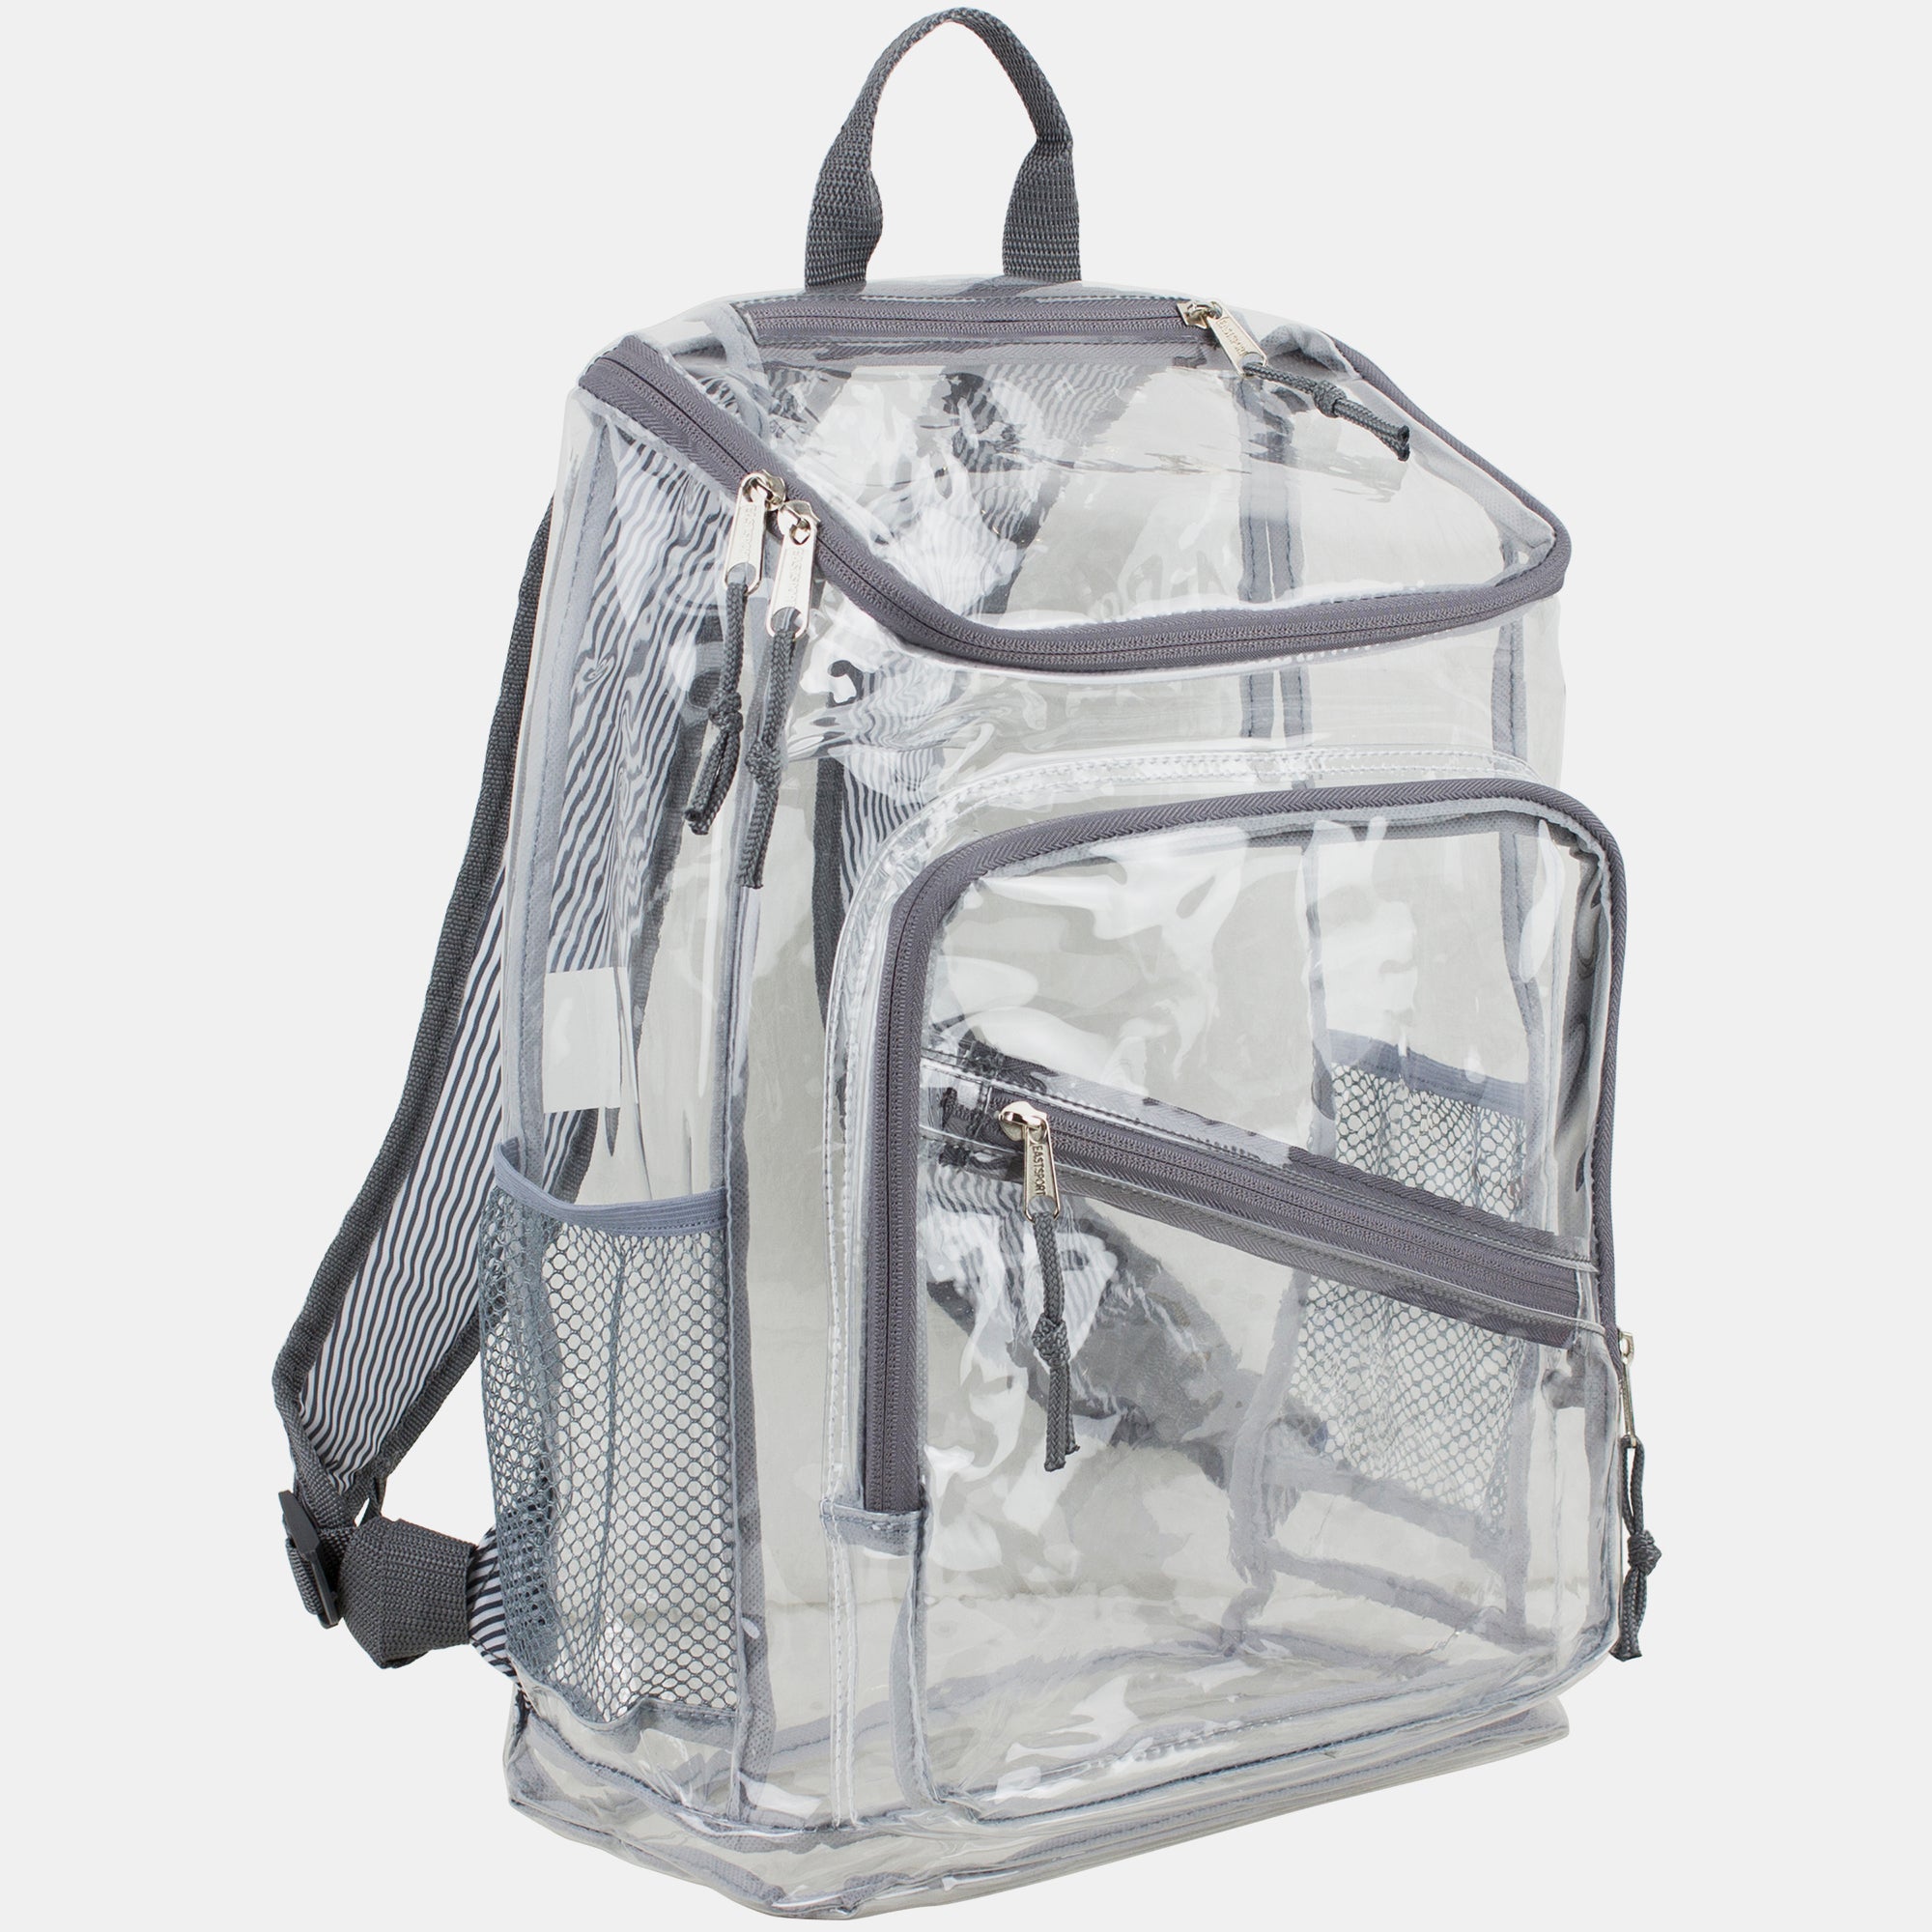 Eastsport Durable Clear Top Loader Backpack with Adjustable Printed St